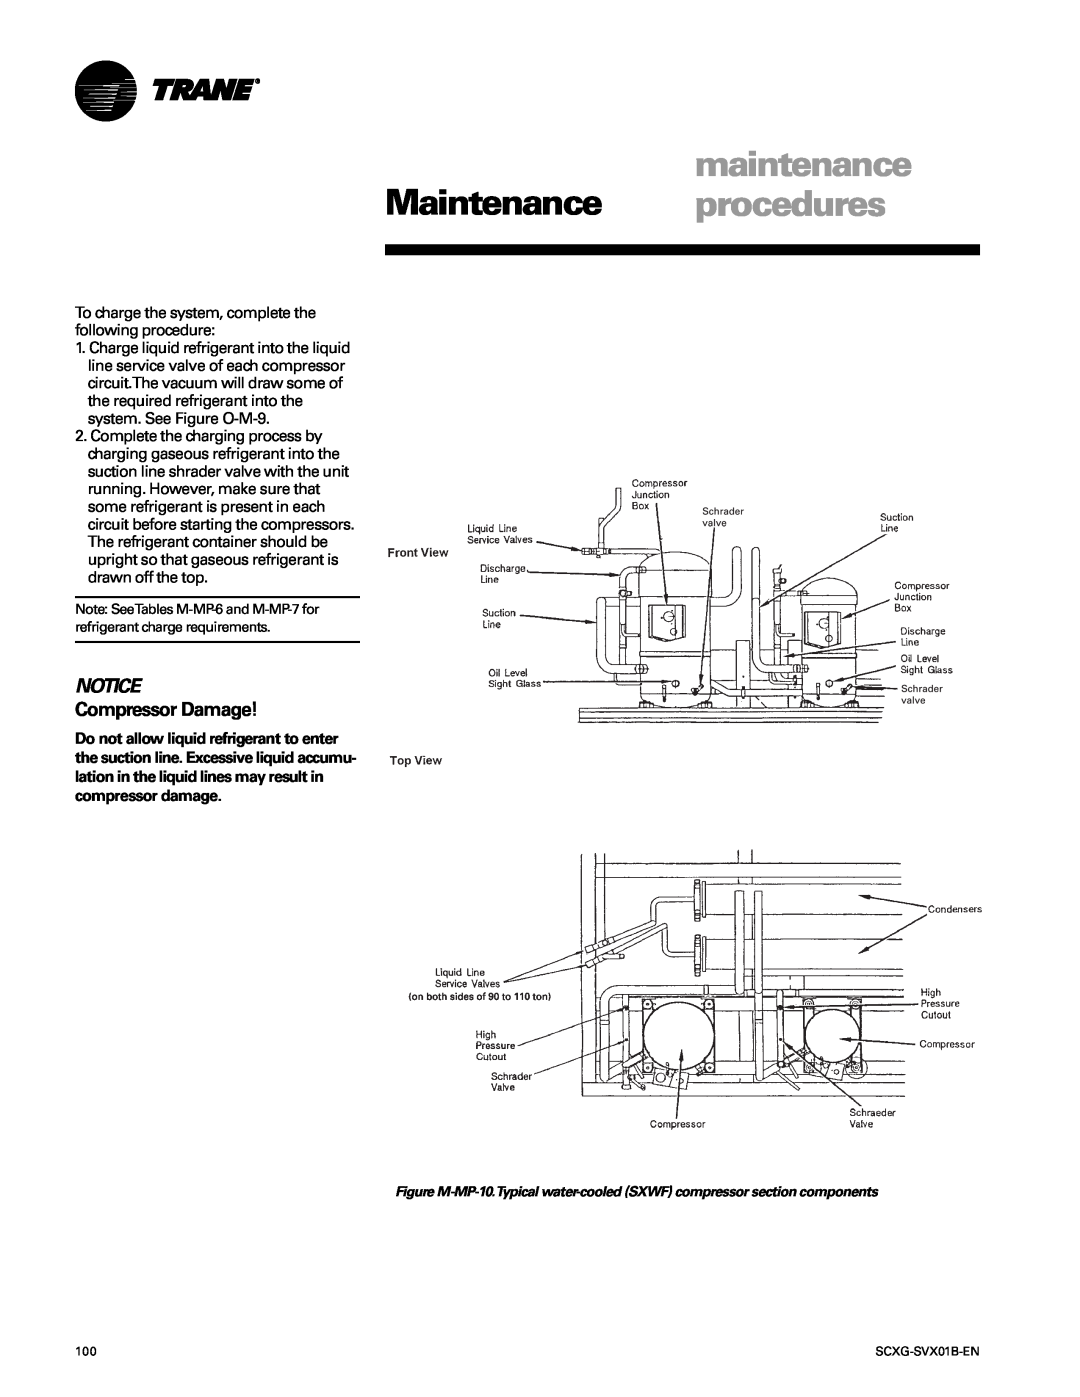 Trane SCXG-SVX01B-EN manual Maintenance, maintenance procedures, Notice, Compressor Damage 